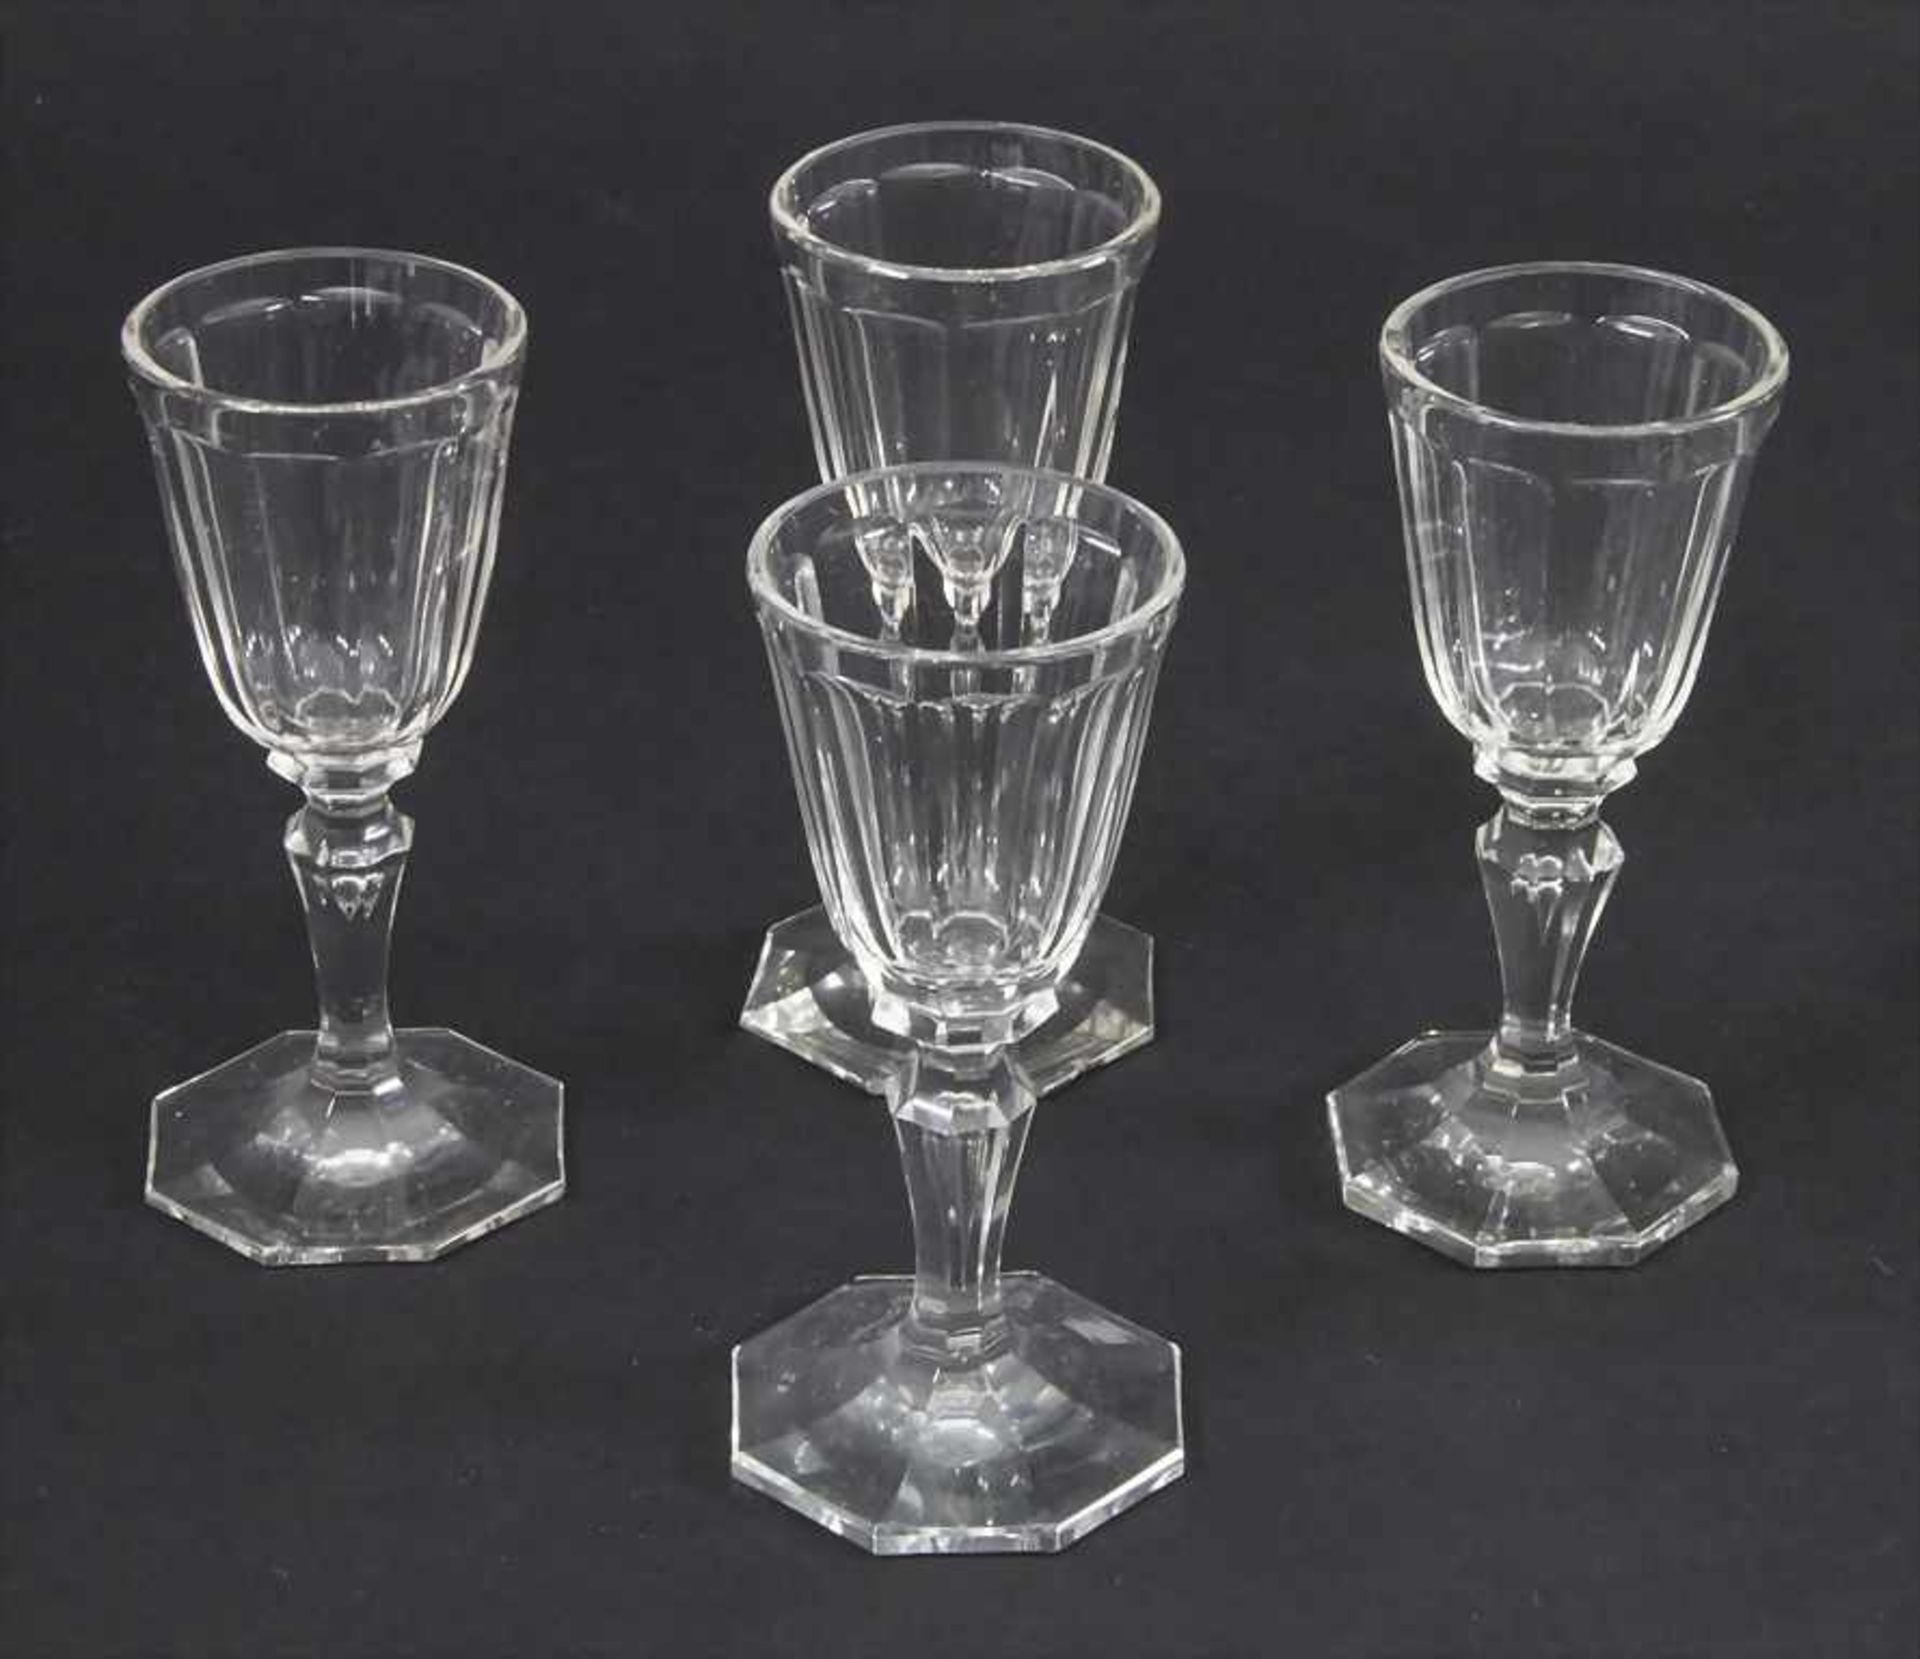 6 Schnapsgläser / 6 shot glasses, J. & L. Lobmeyr, Wien, um 1900